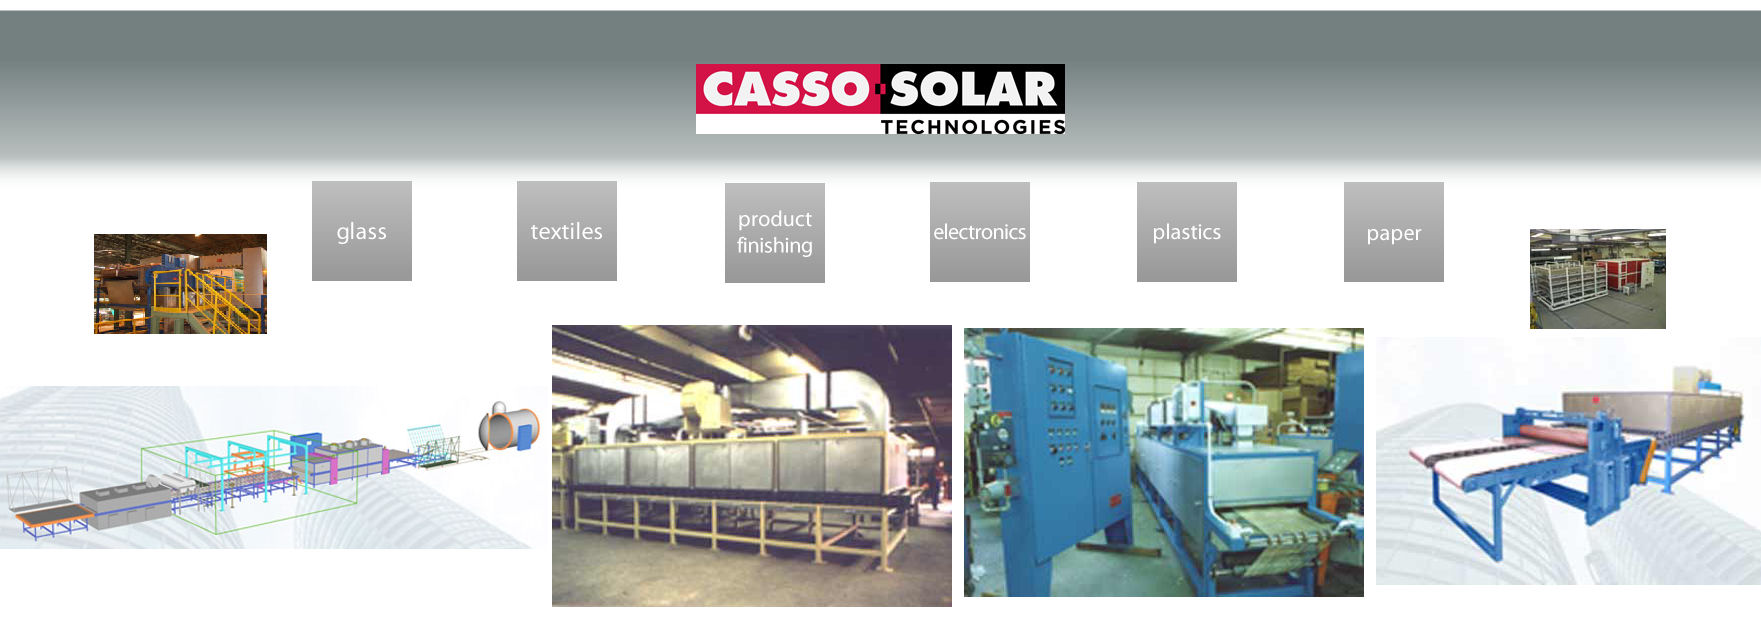 Casso-Solar Technologies